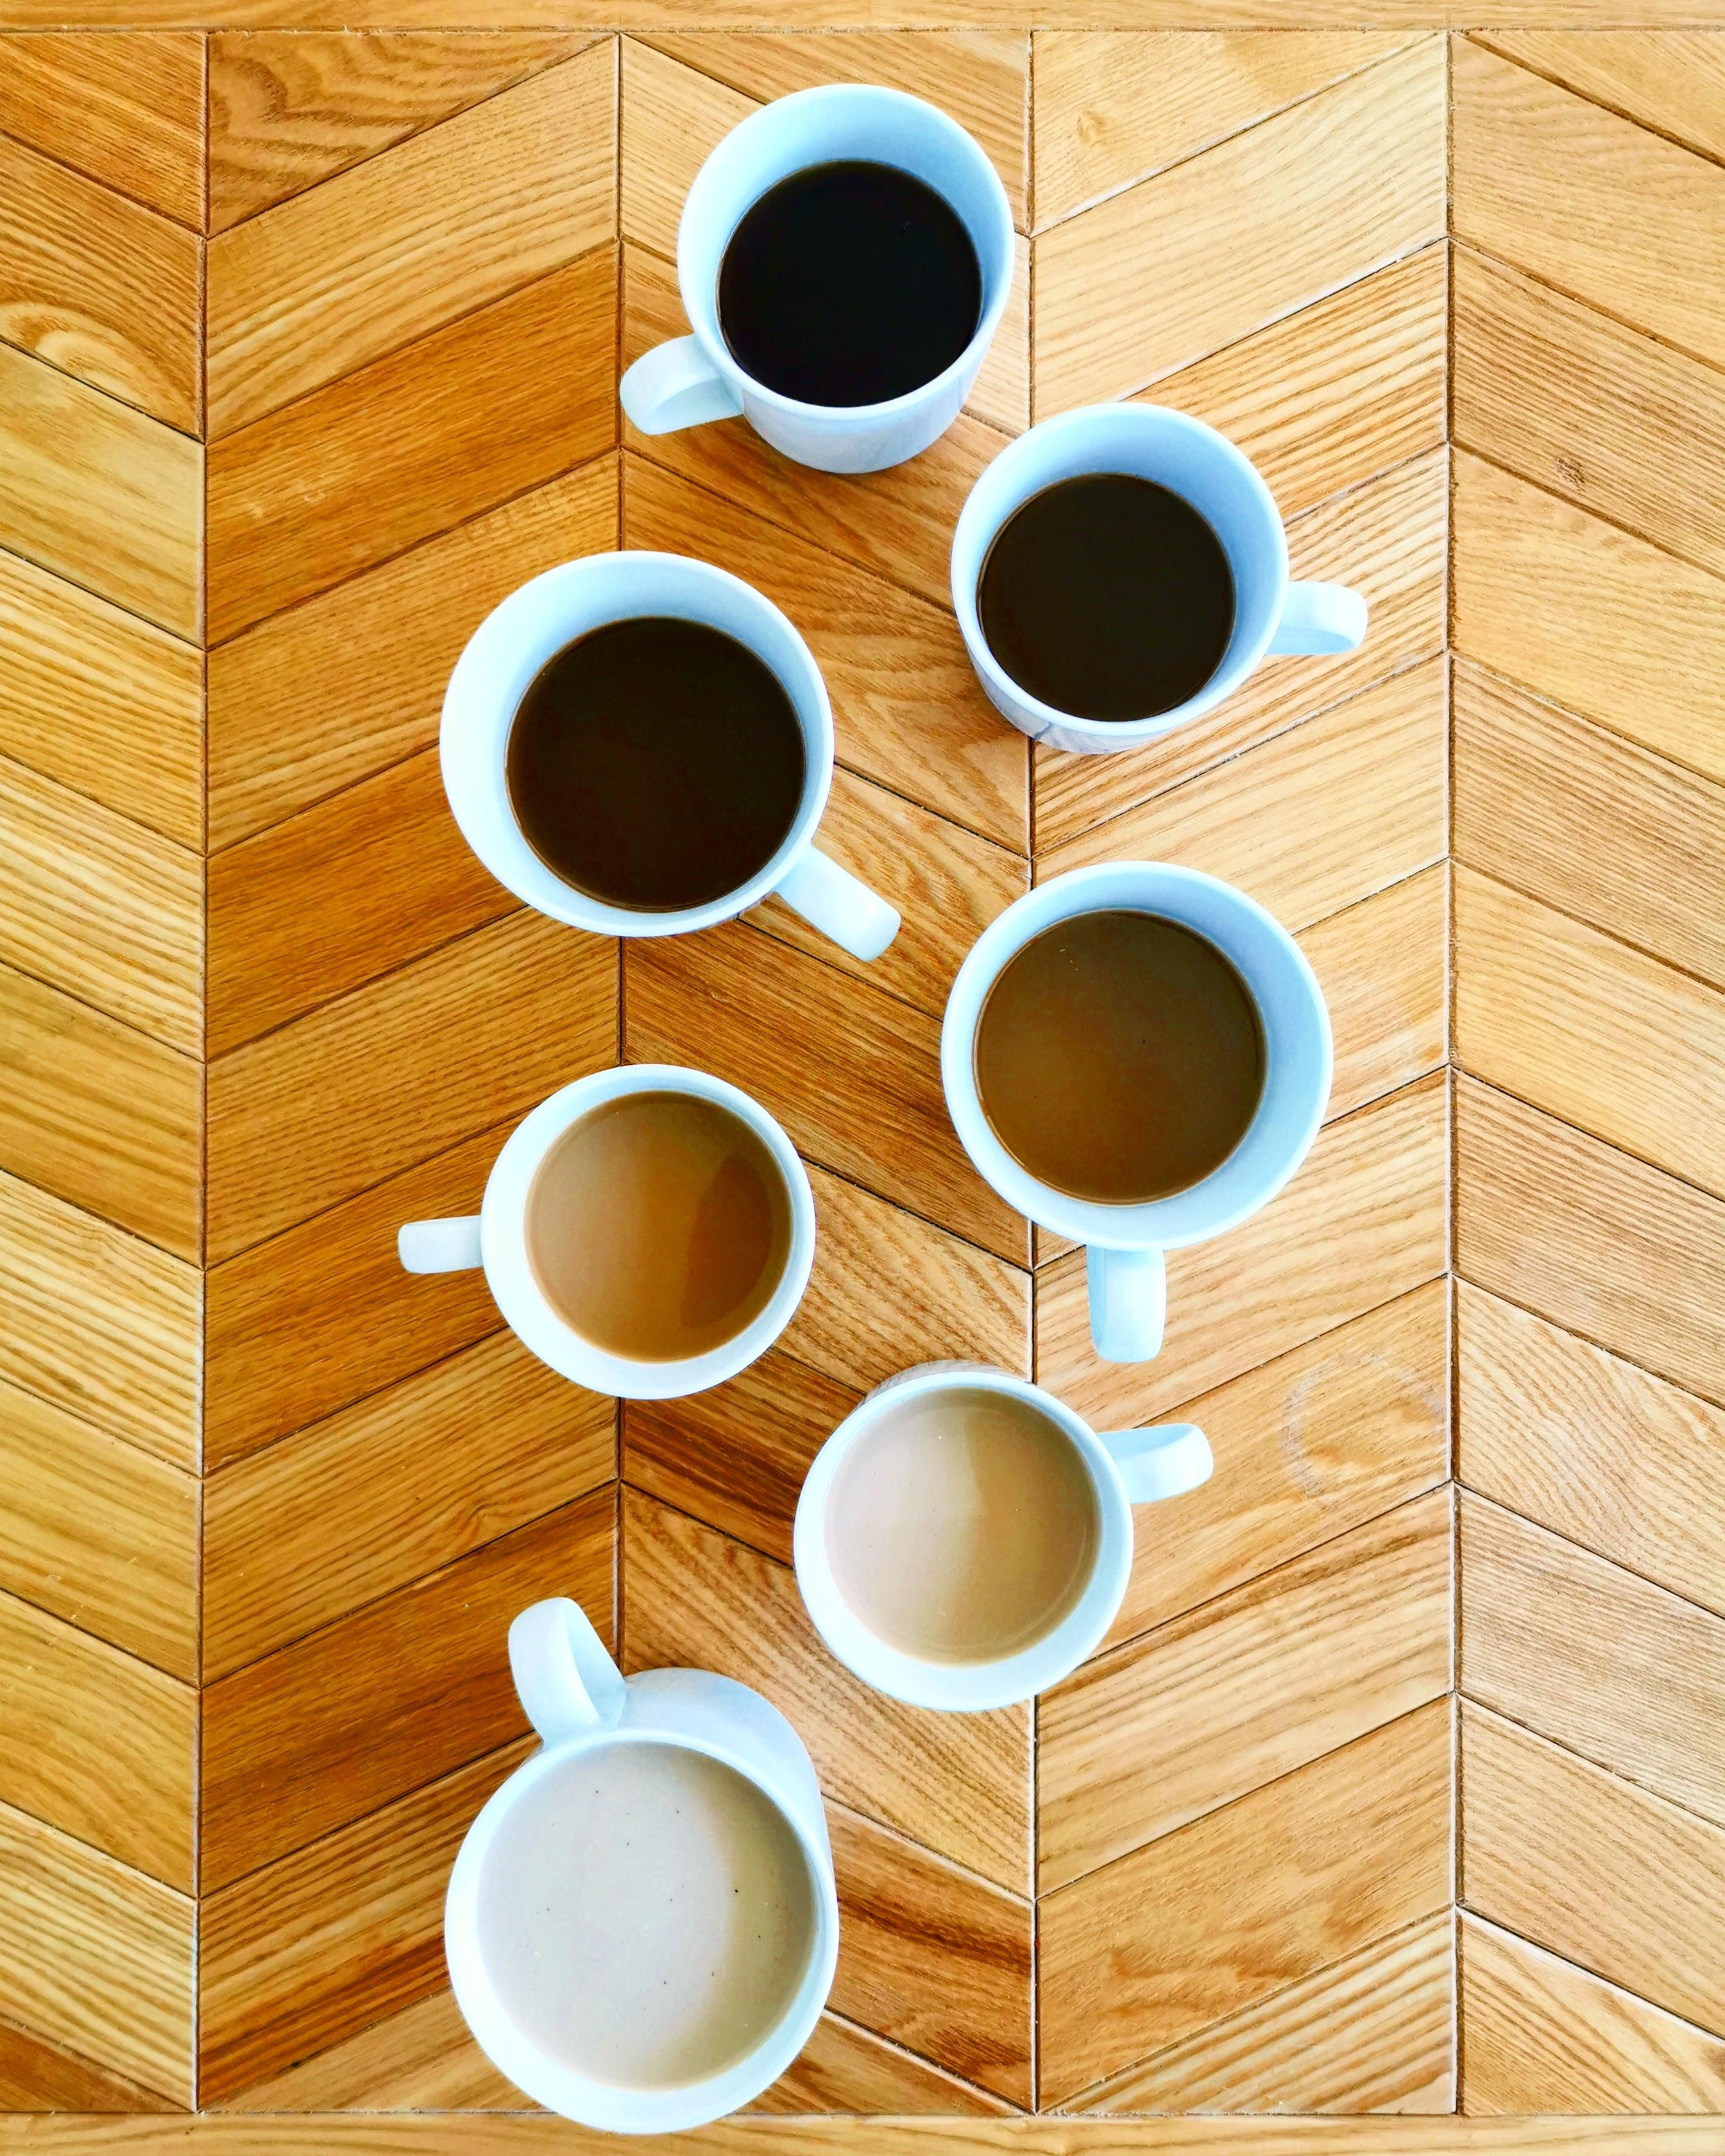 But first... coffee🤍🤎🖤
#coffee #blackcoffee #coffeetime #kaffeetisch